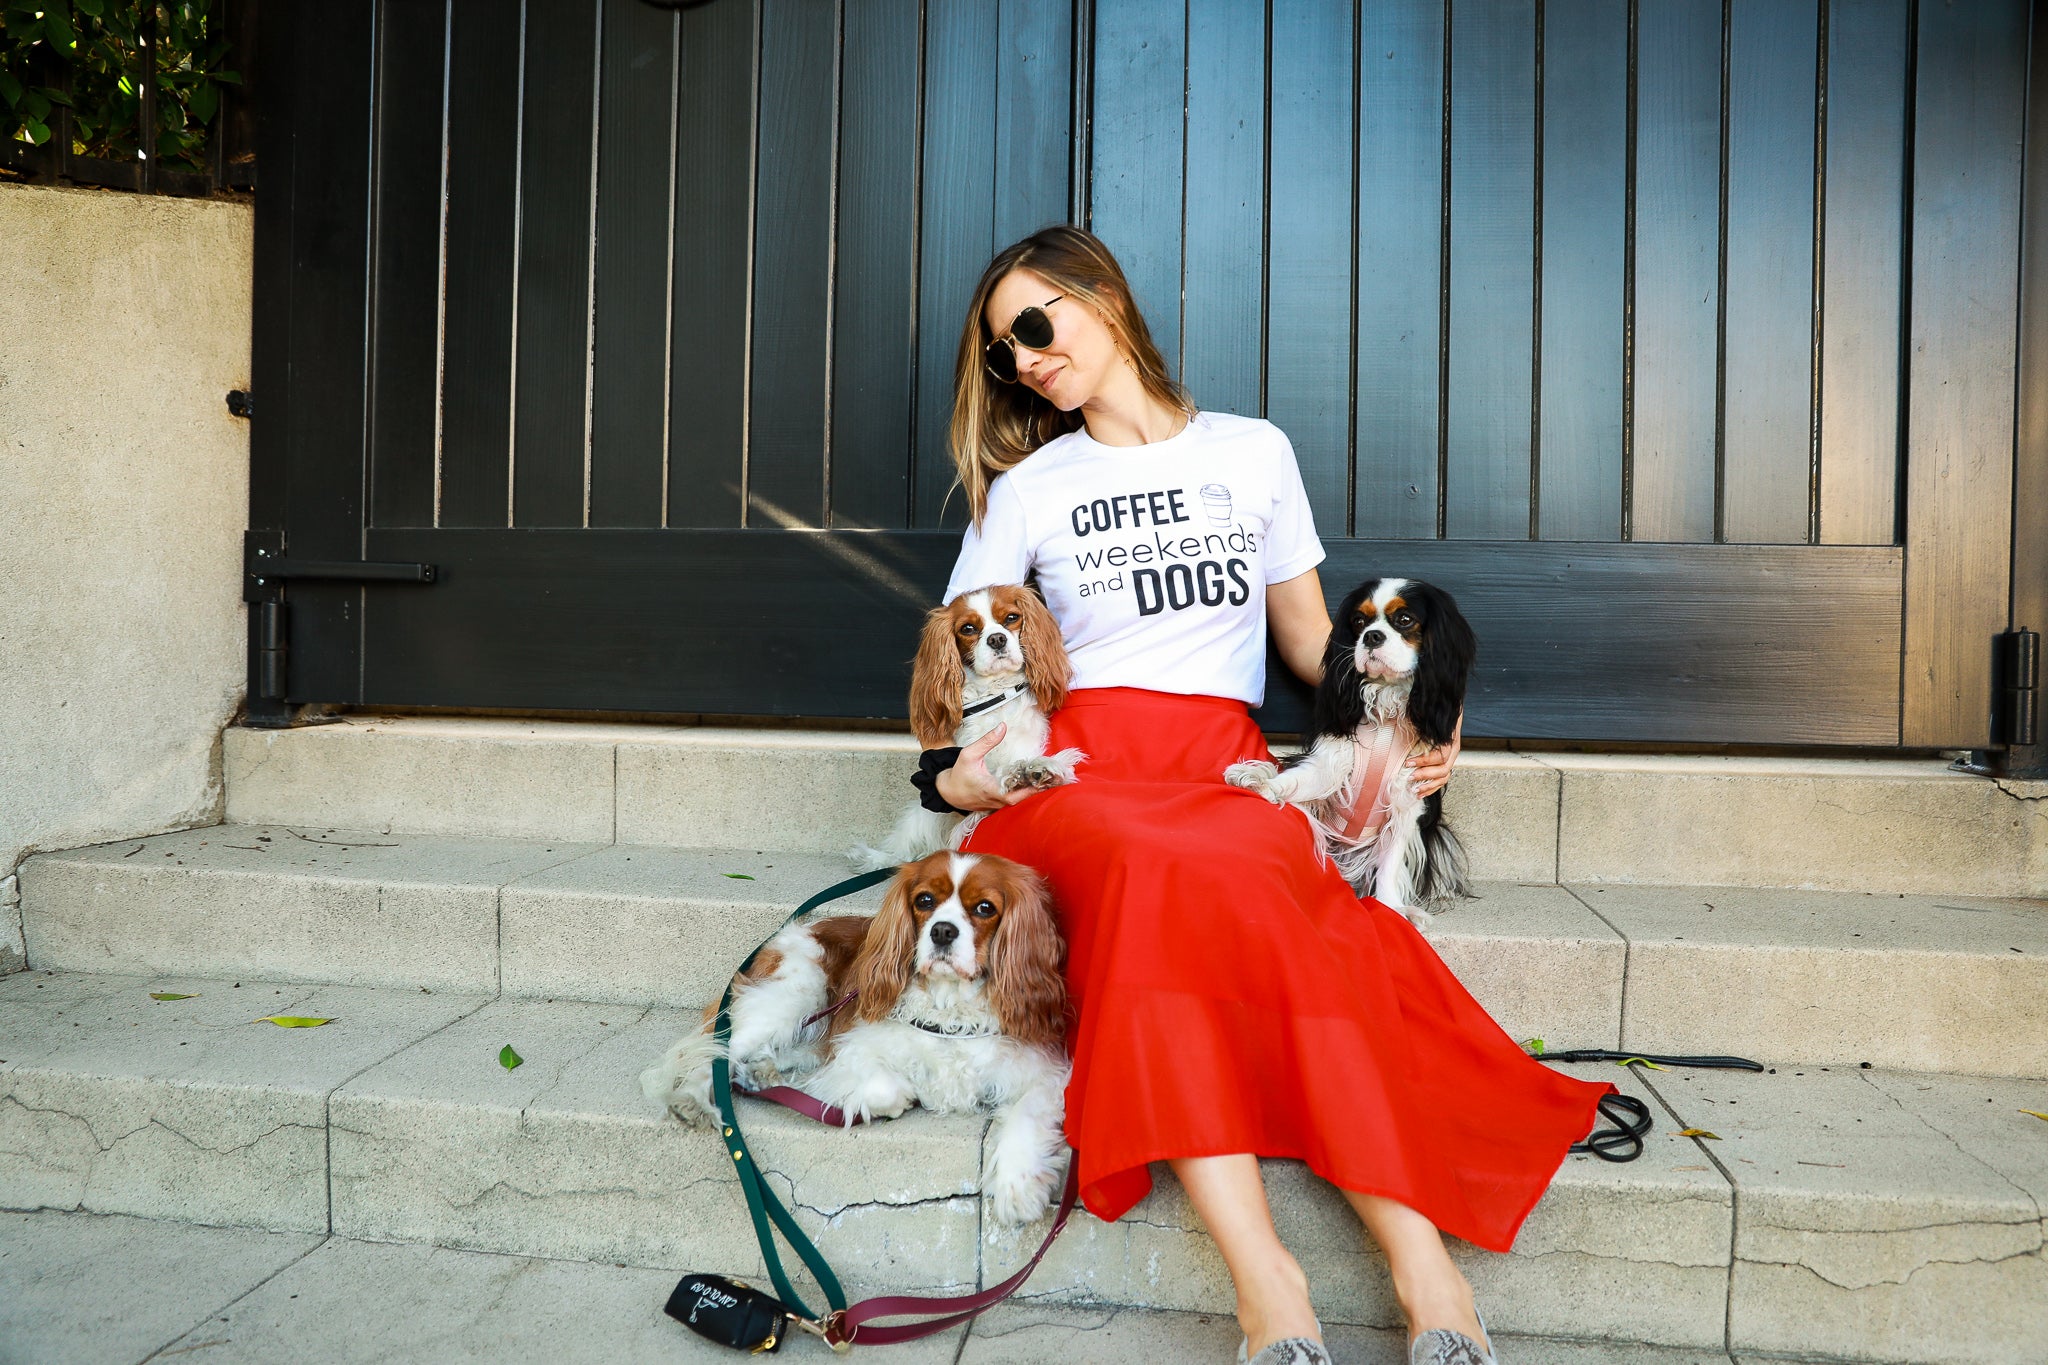 Coffee, Weekends & Dogs Short-Sleeve Unisex T-Shirt